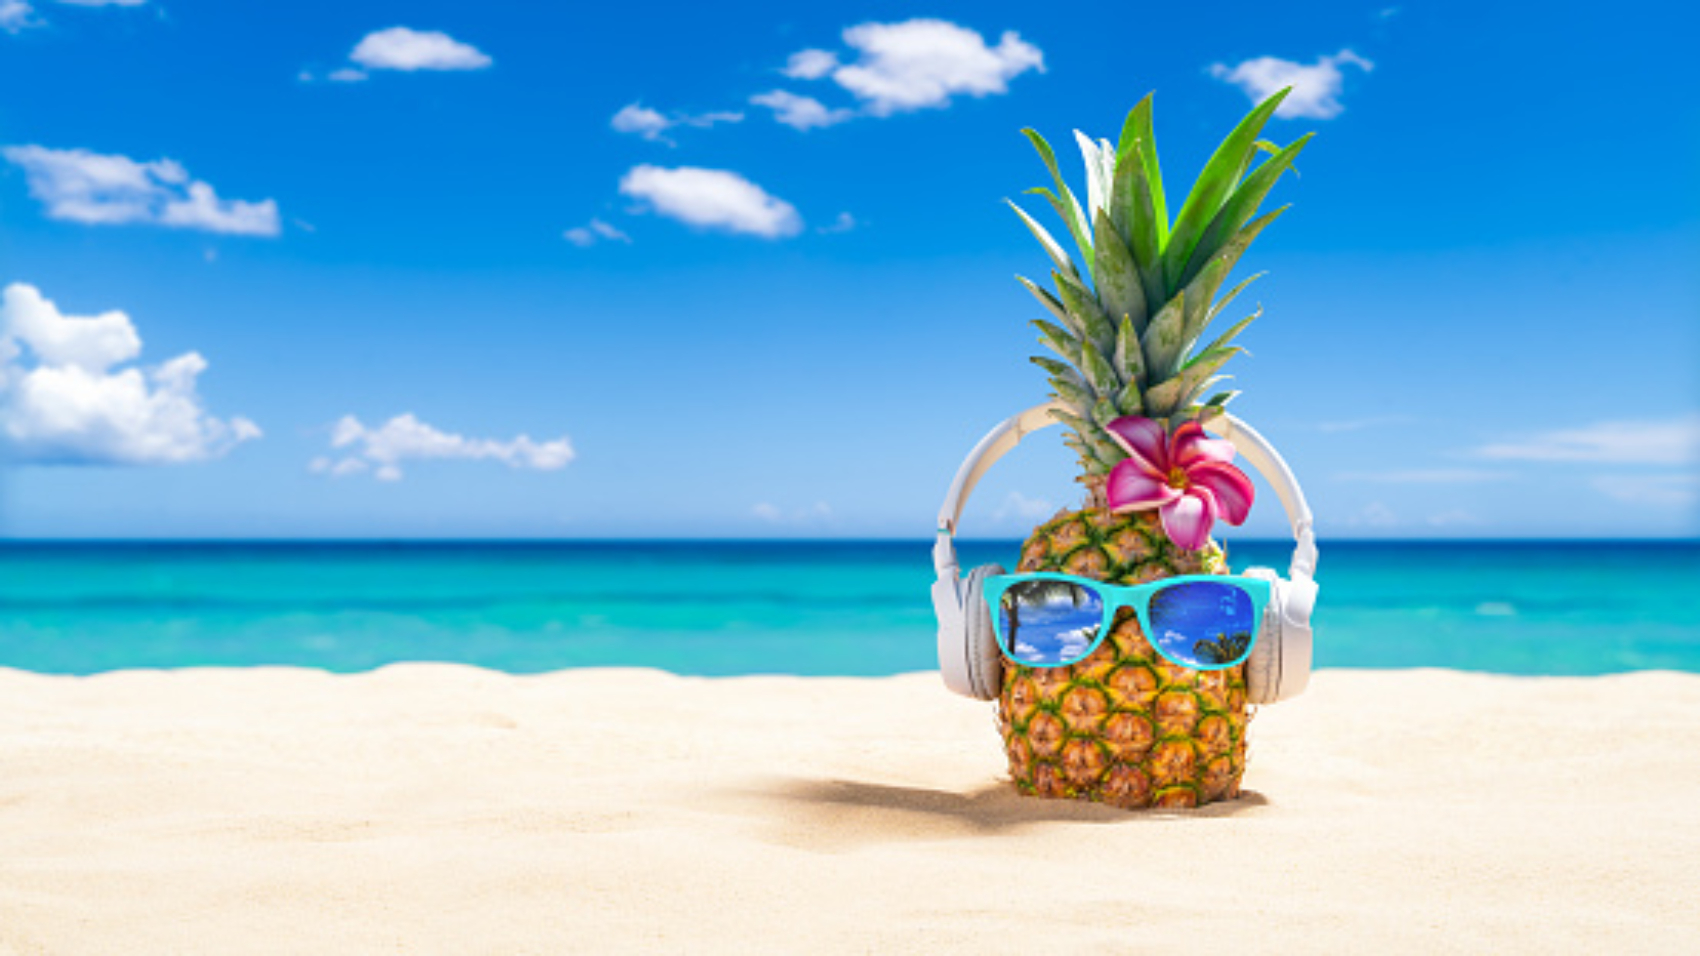 Pineapple on the beach wearing headphones and sunglasses